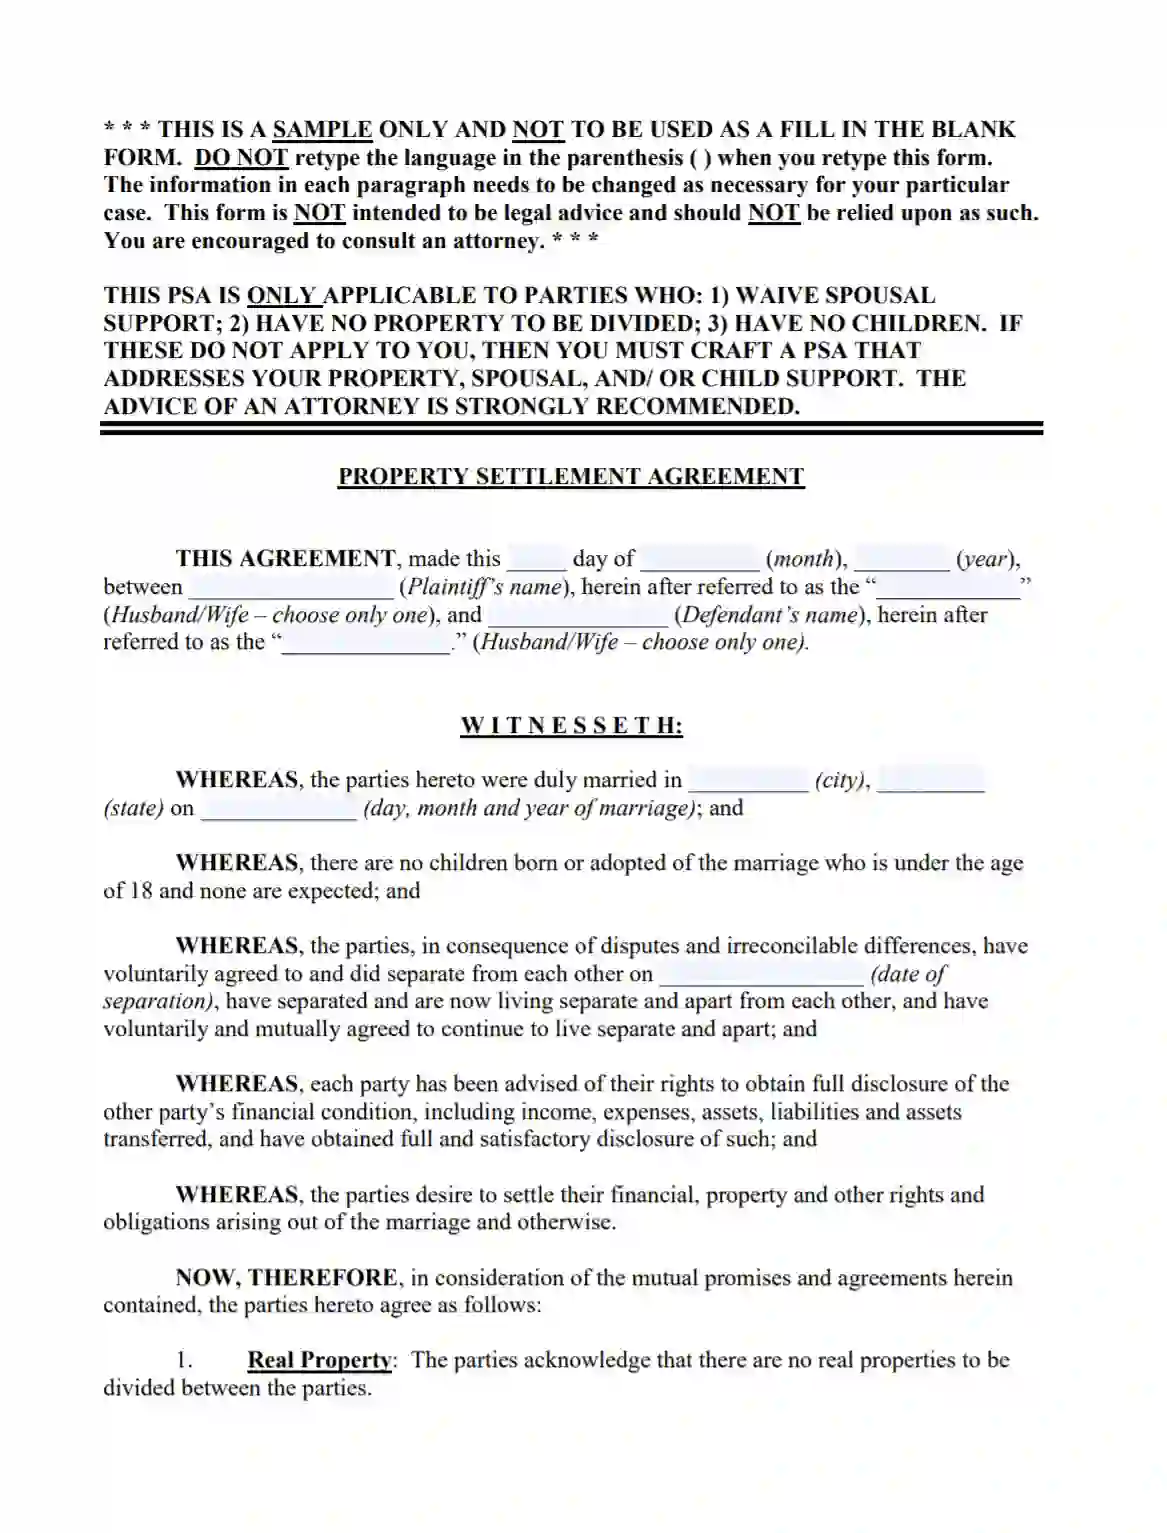 Virginia Divorce (Marital) Settlement Agreement Form [PDF] Intended For divorce mediation agreement template